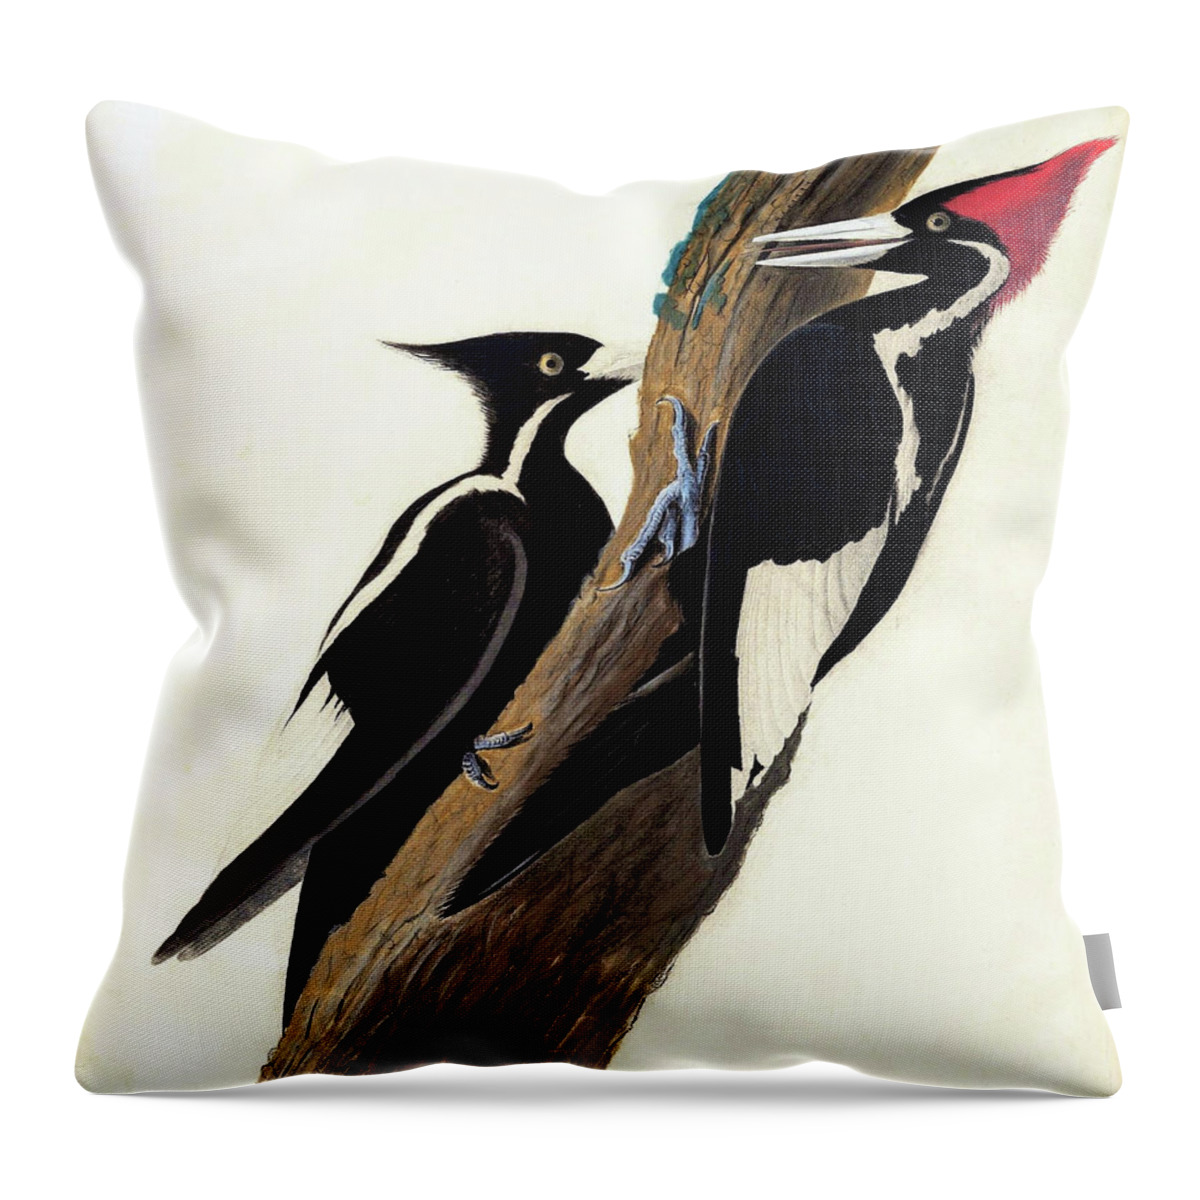 Ivory Billed Woodpecker Throw Pillow featuring the painting Ivory billed woodpecker - Digital Remastered Edition #2 by John James Audubon